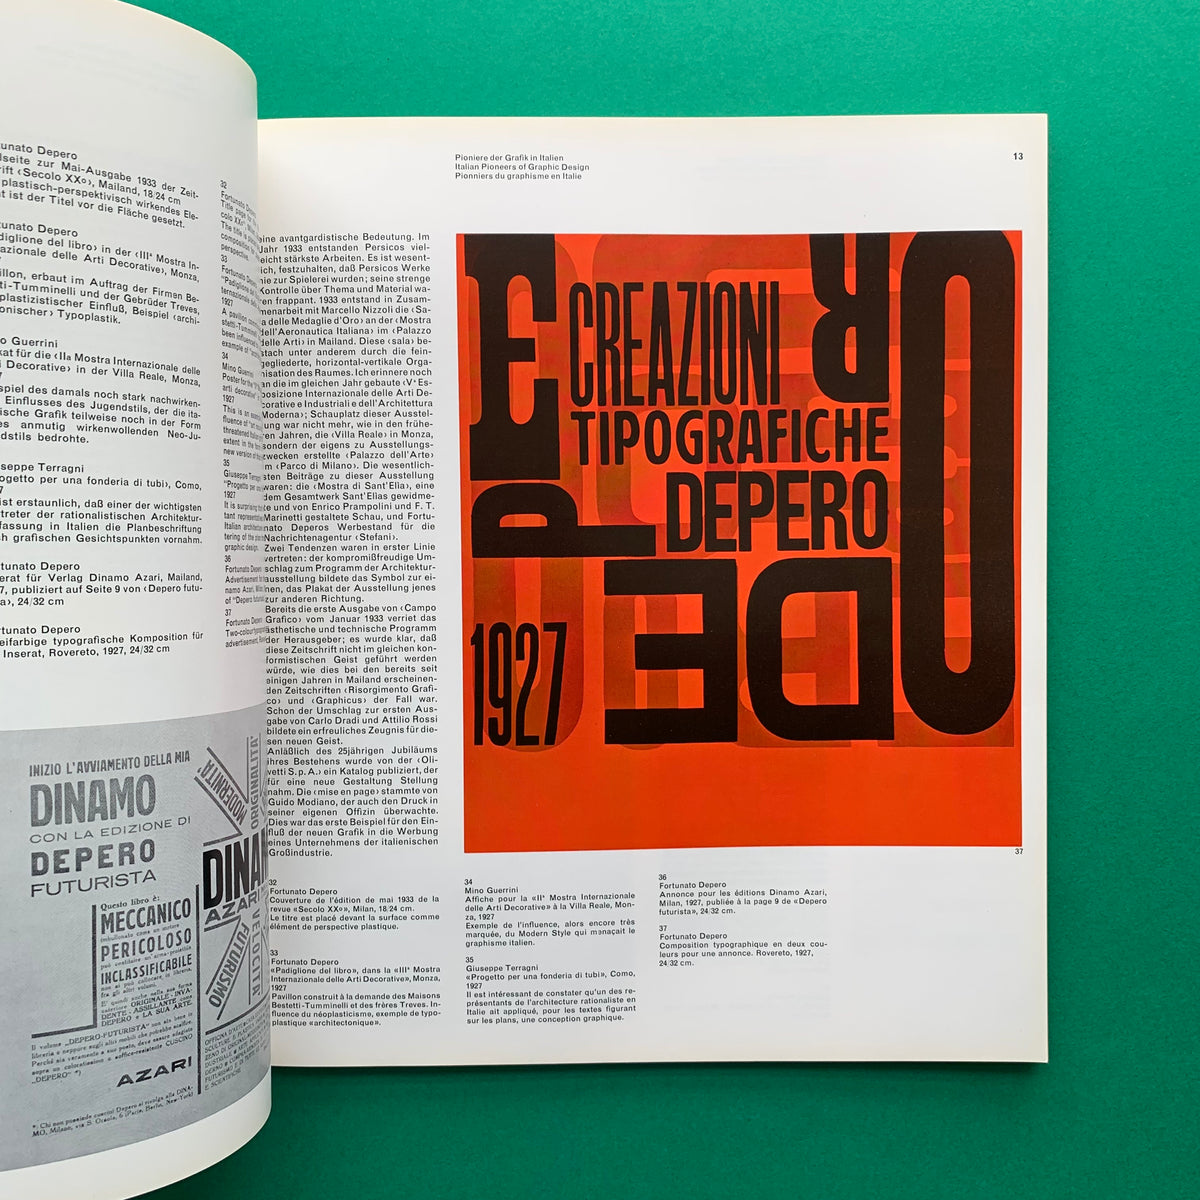 Neue Grafik / New Graphic Design / Graphisme actuel No.3 1959 